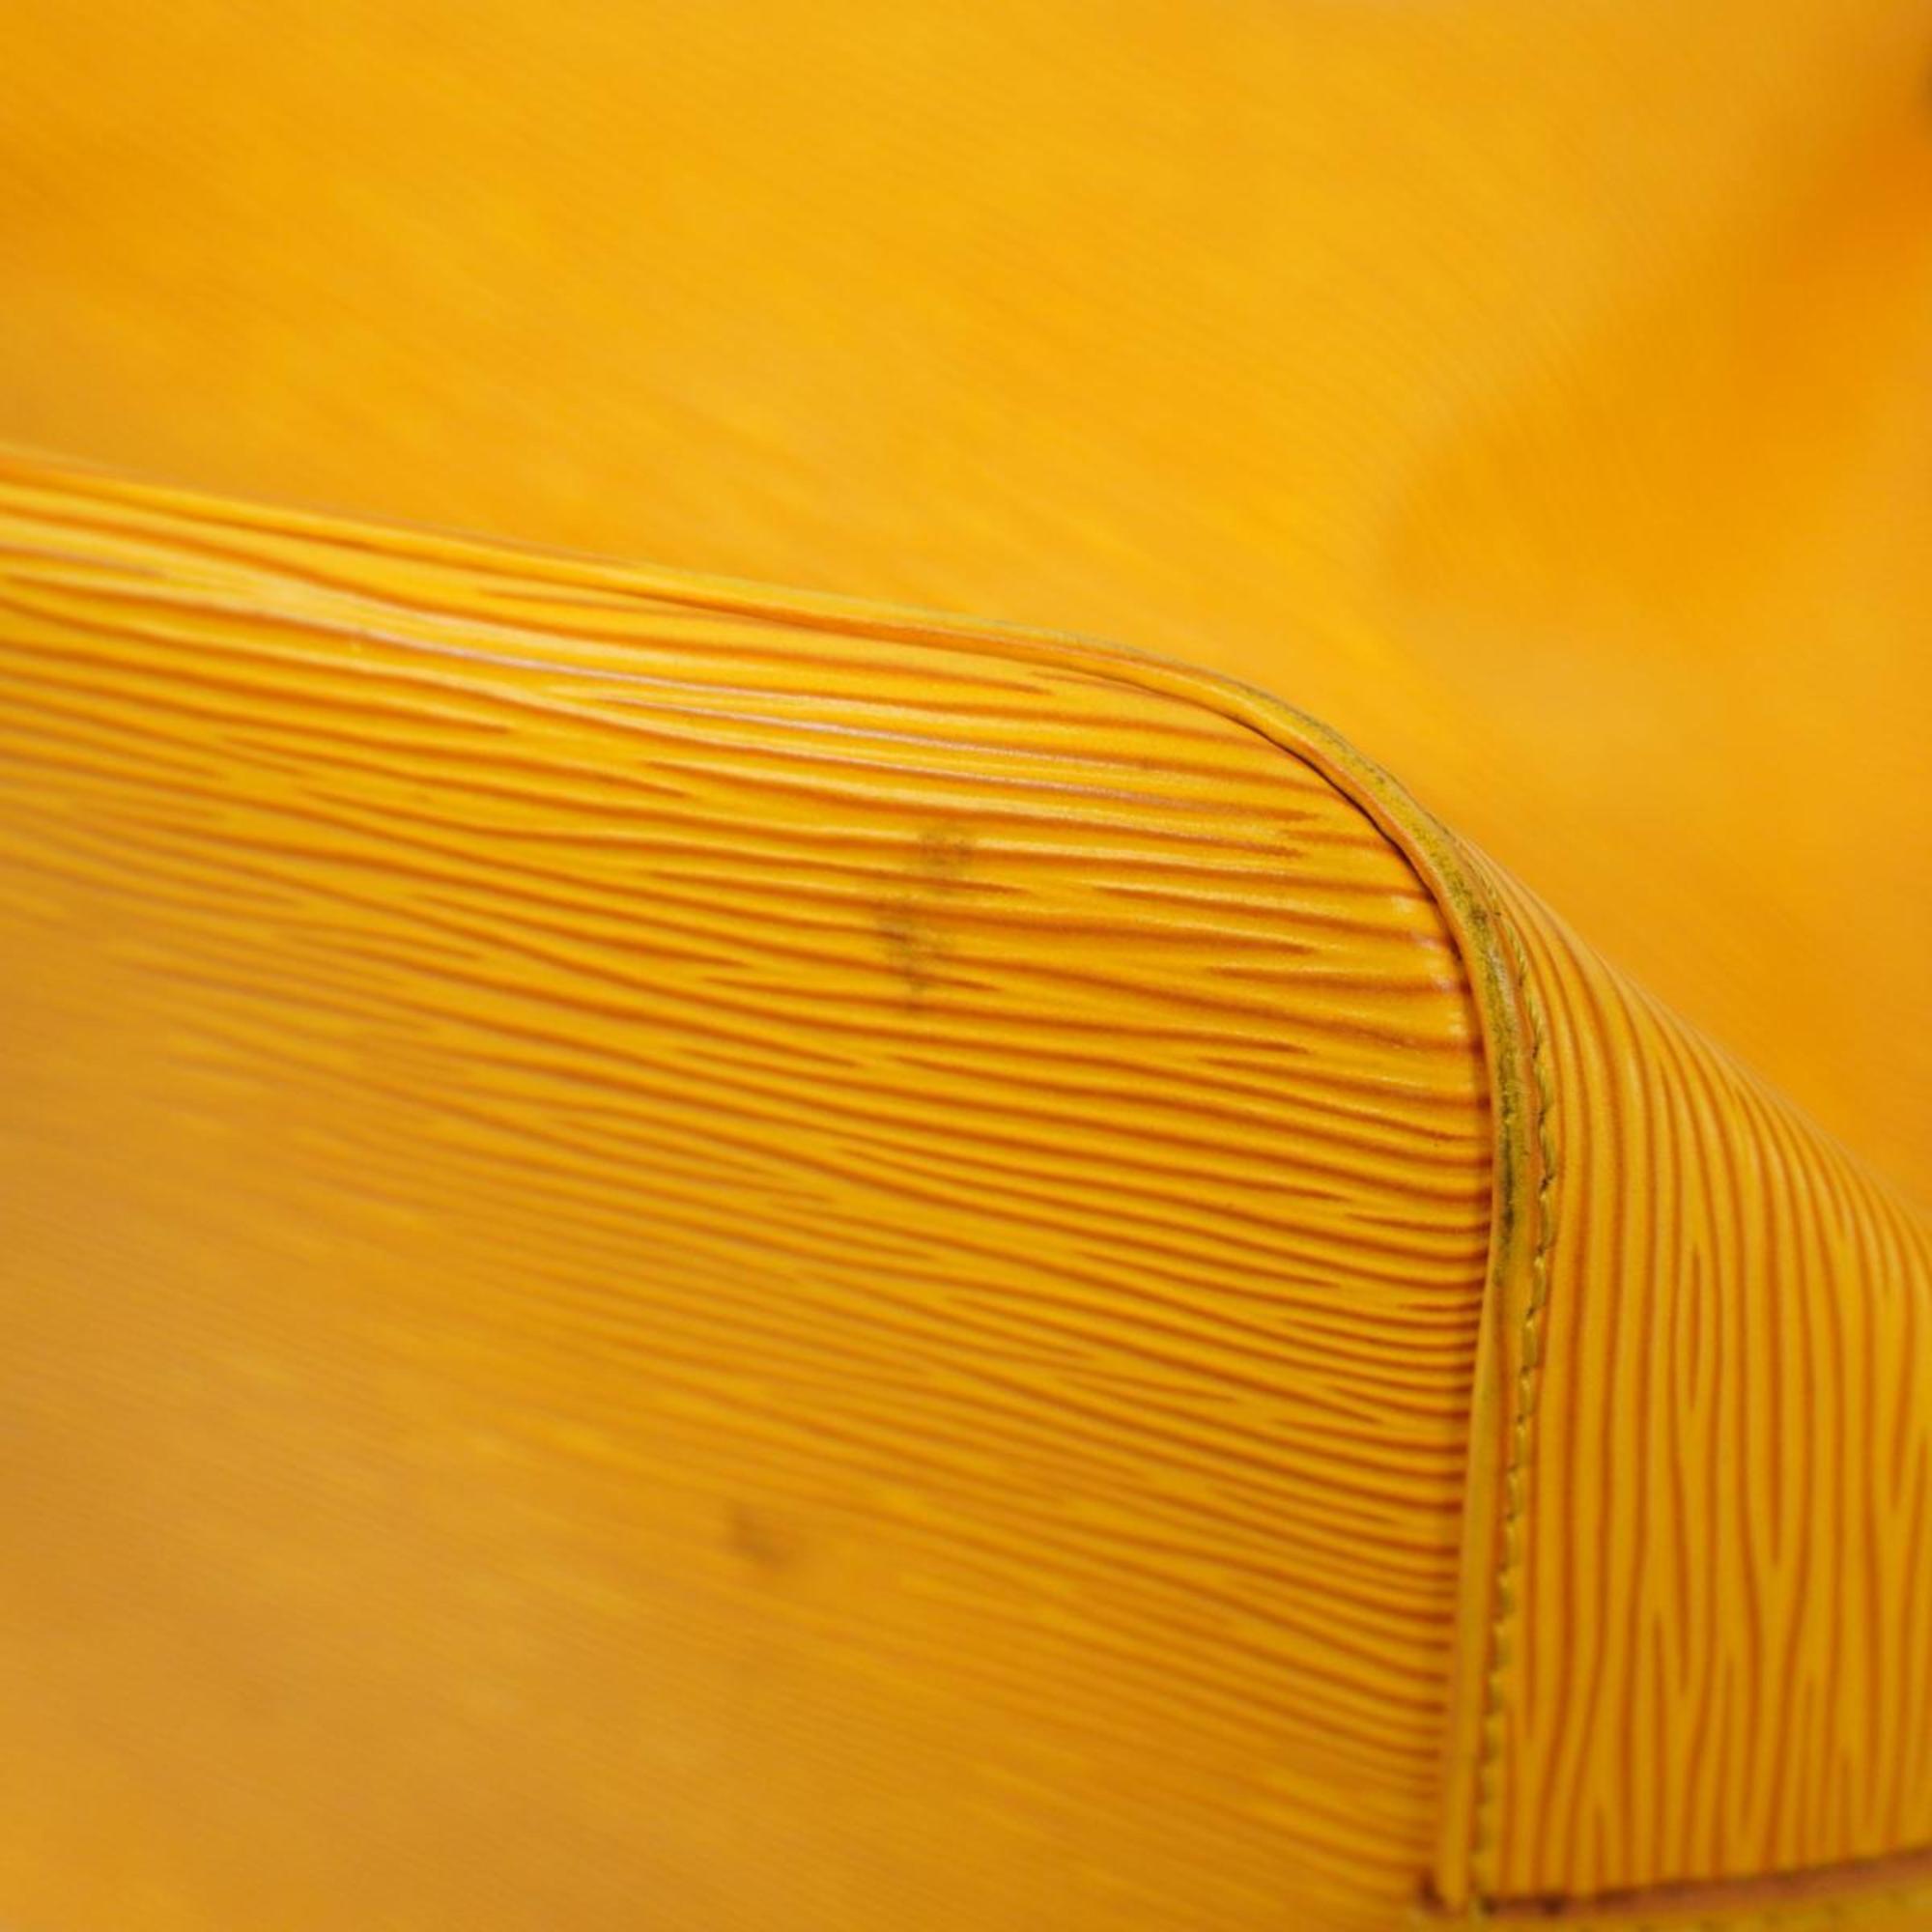 Louis Vuitton Shoulder Bag Epi Petit Noe M44109 Jaune Ladies